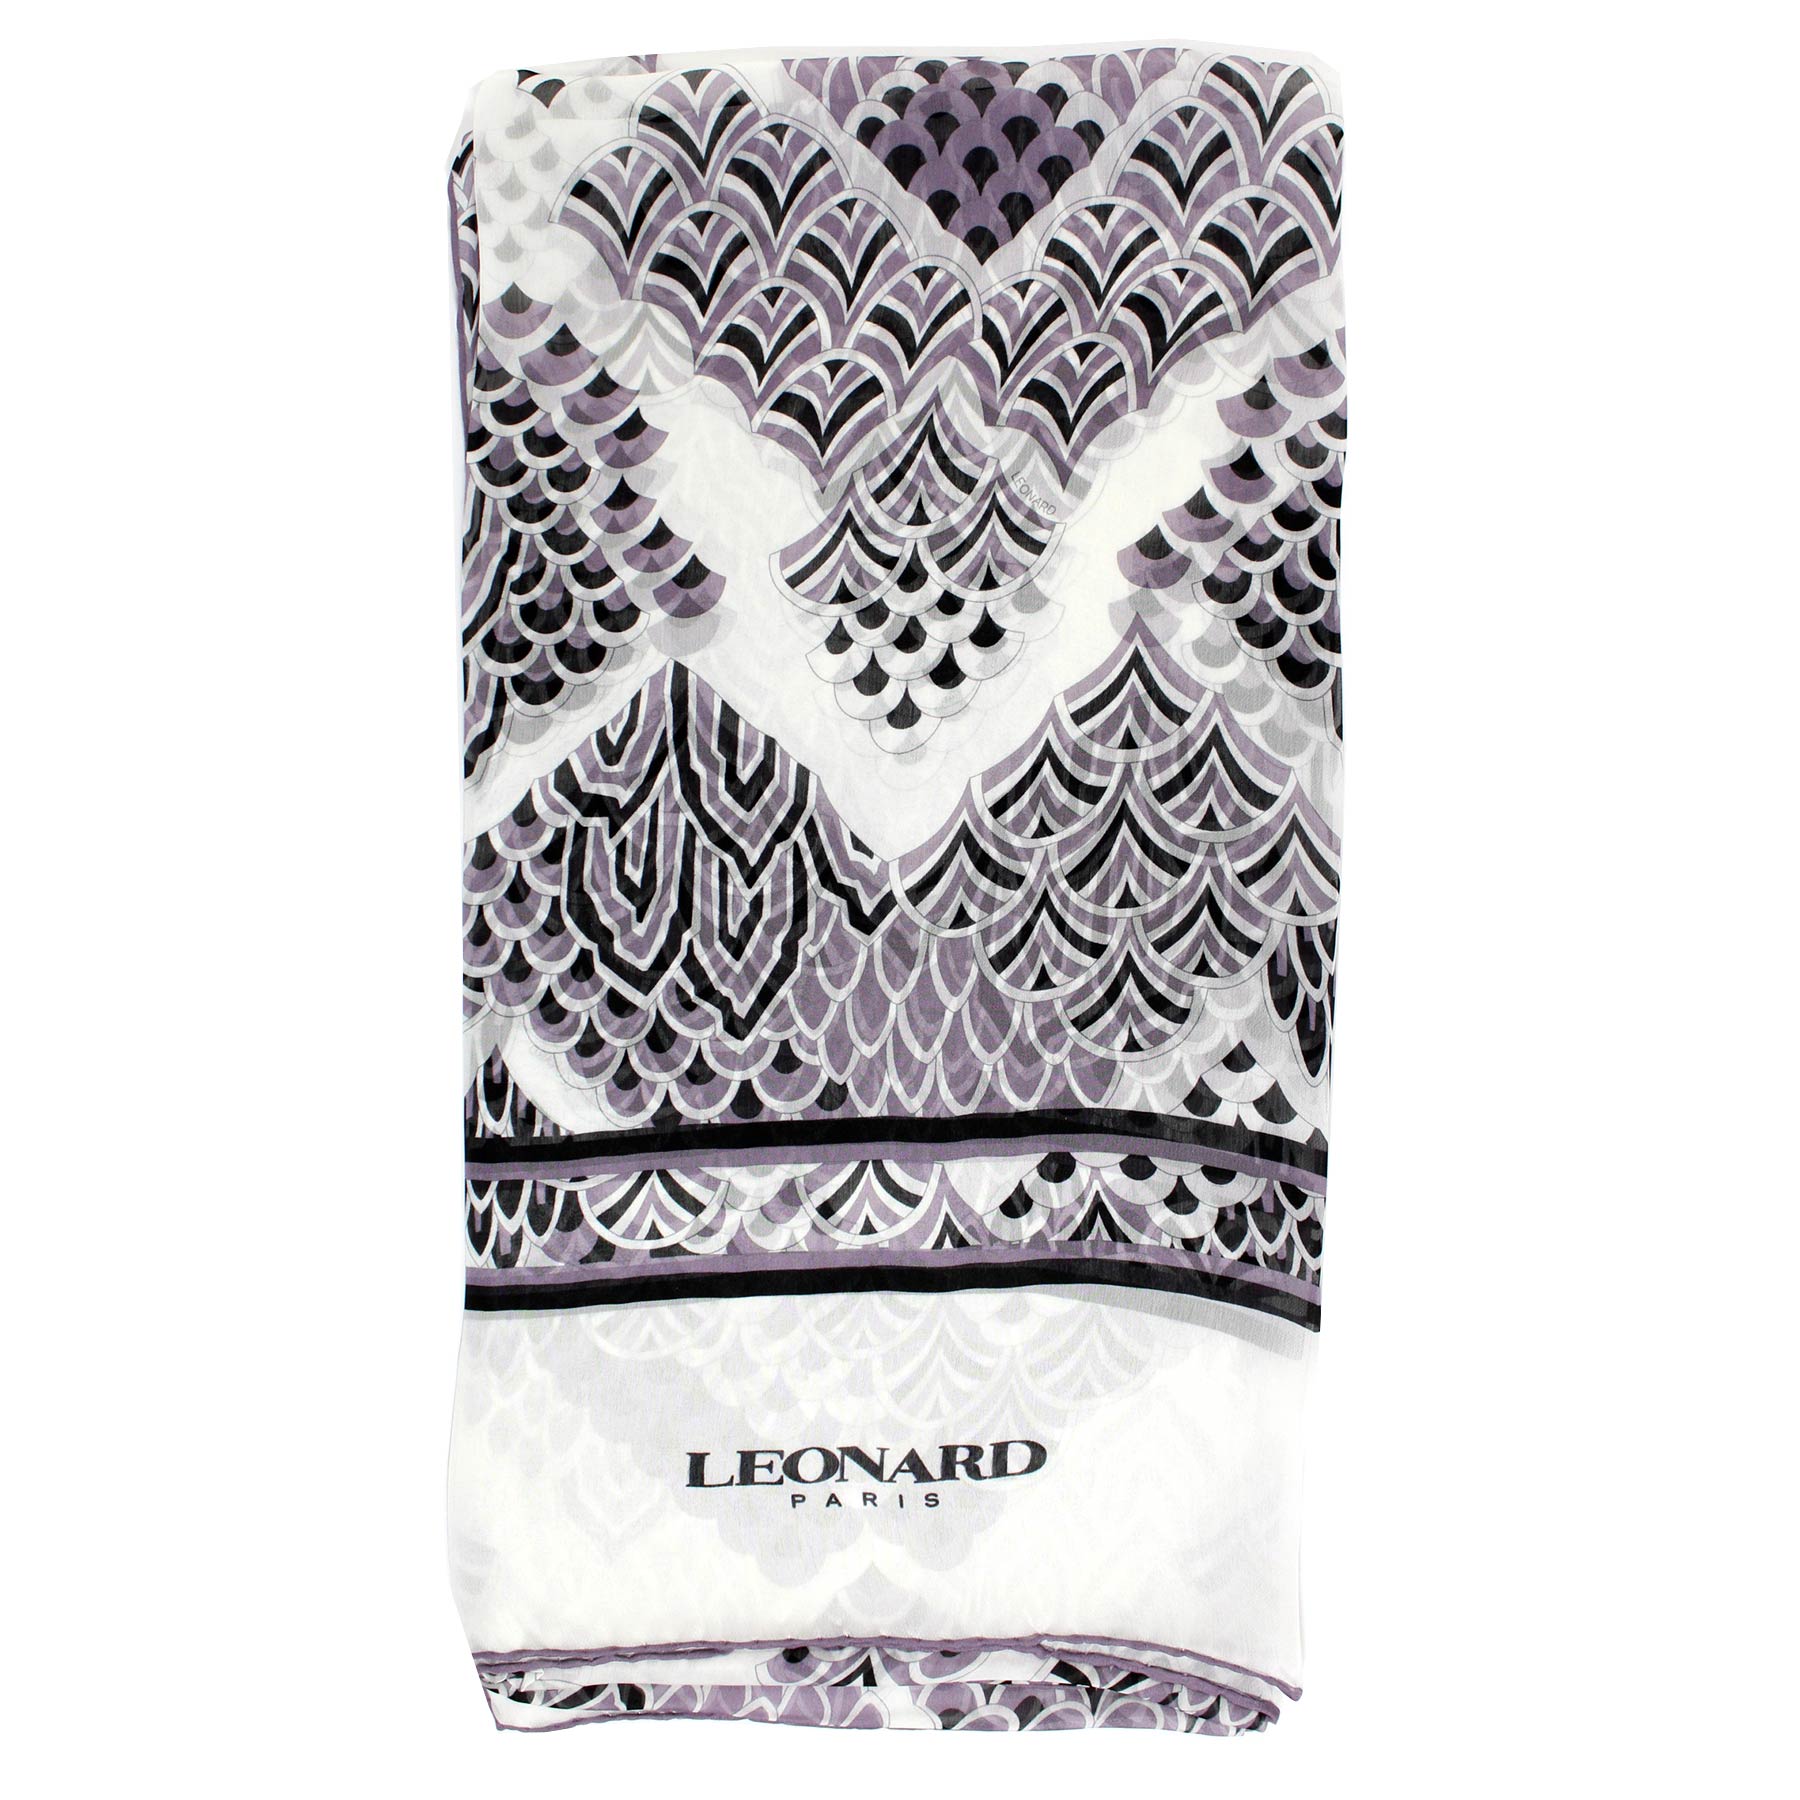 Leonard Paris Scarf Black White Design - Chiffon Silk Shawl SALE